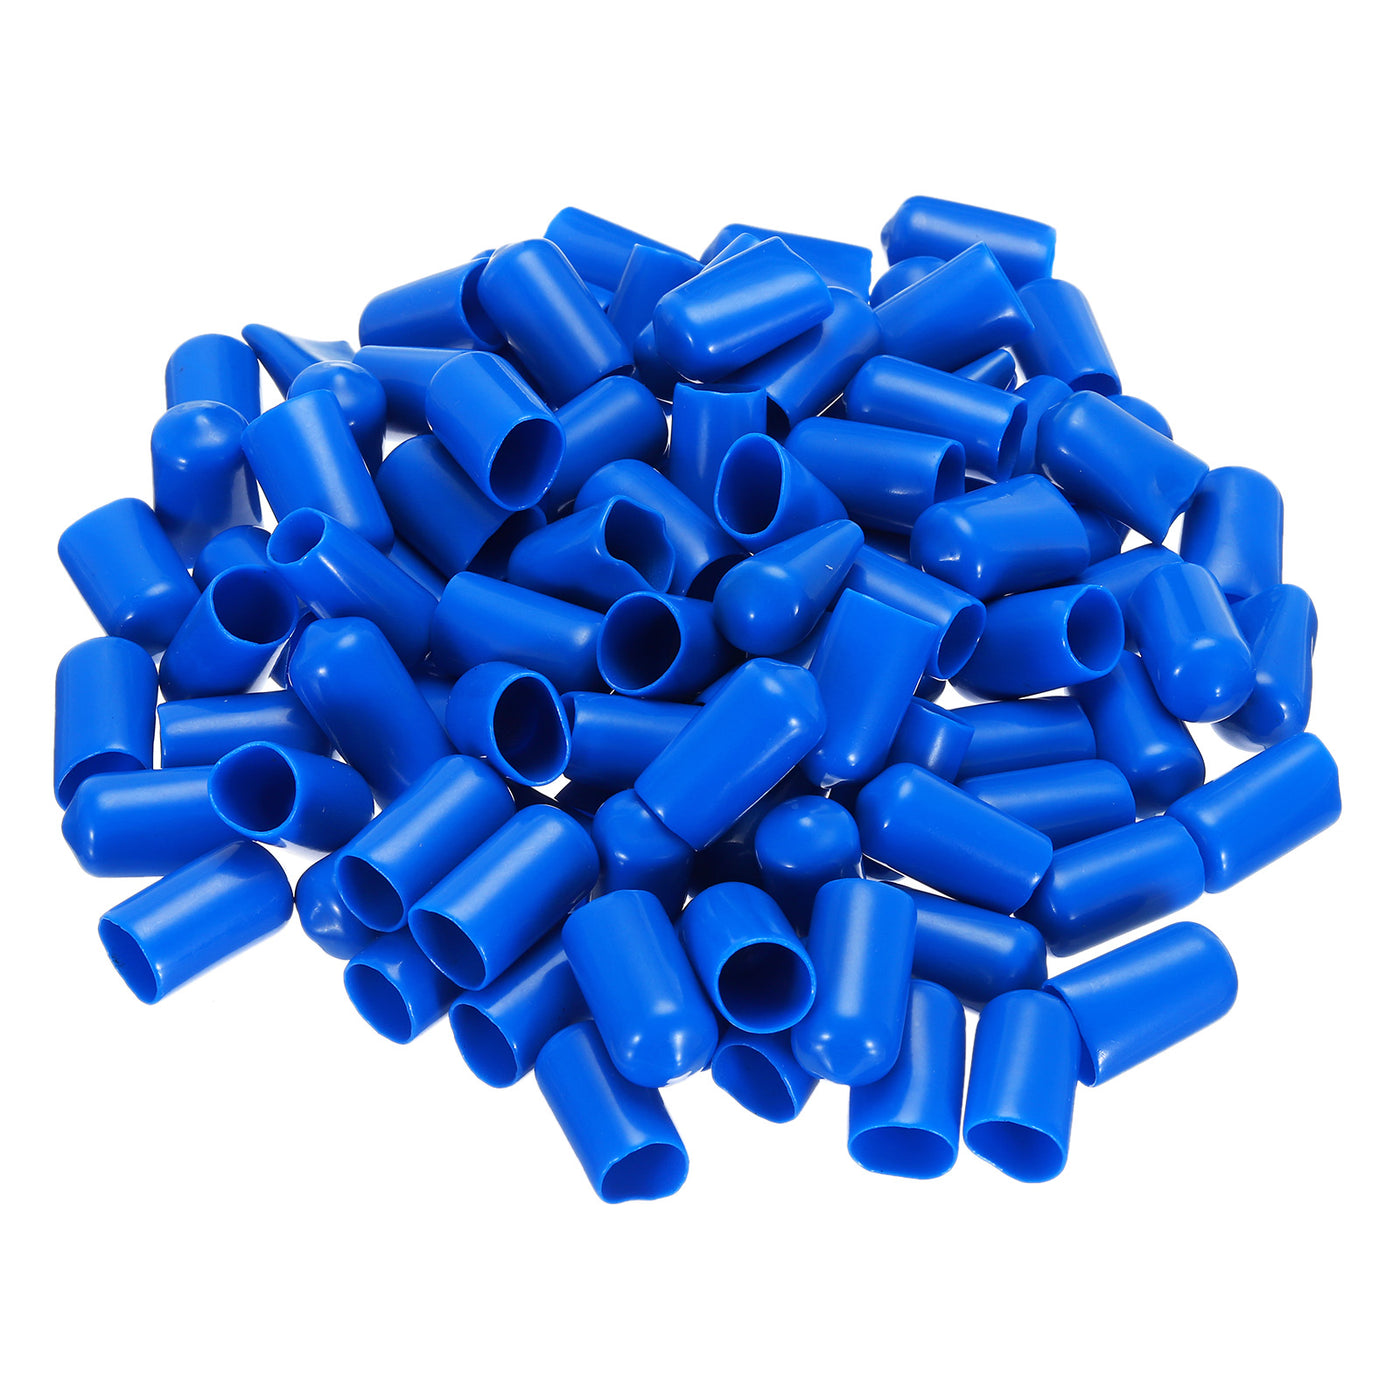 uxcell Uxcell 50pcs Rubber End Caps 11mm ID Vinyl PVC Round Tube Bolt Cap Cover Screw Thread Protectors Blue